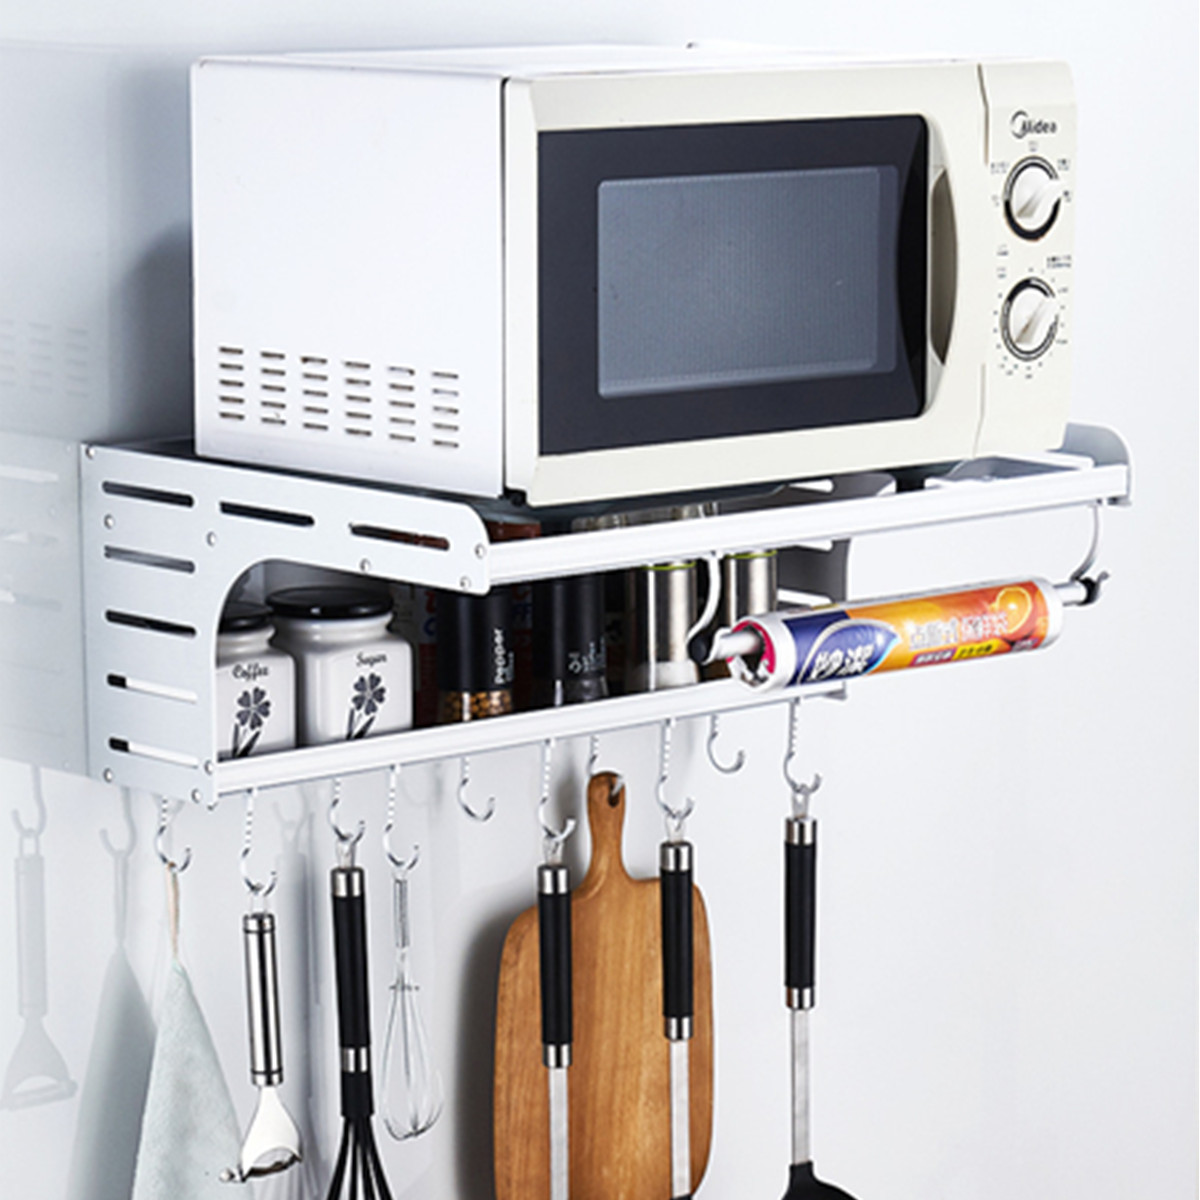 Aluminum-Microwave-Oven-Wall-Mount-Microwave-Kitchen-Desktop-Organizer-Racks-2-Layer-Oven-Stand-Kitc-1602461-1